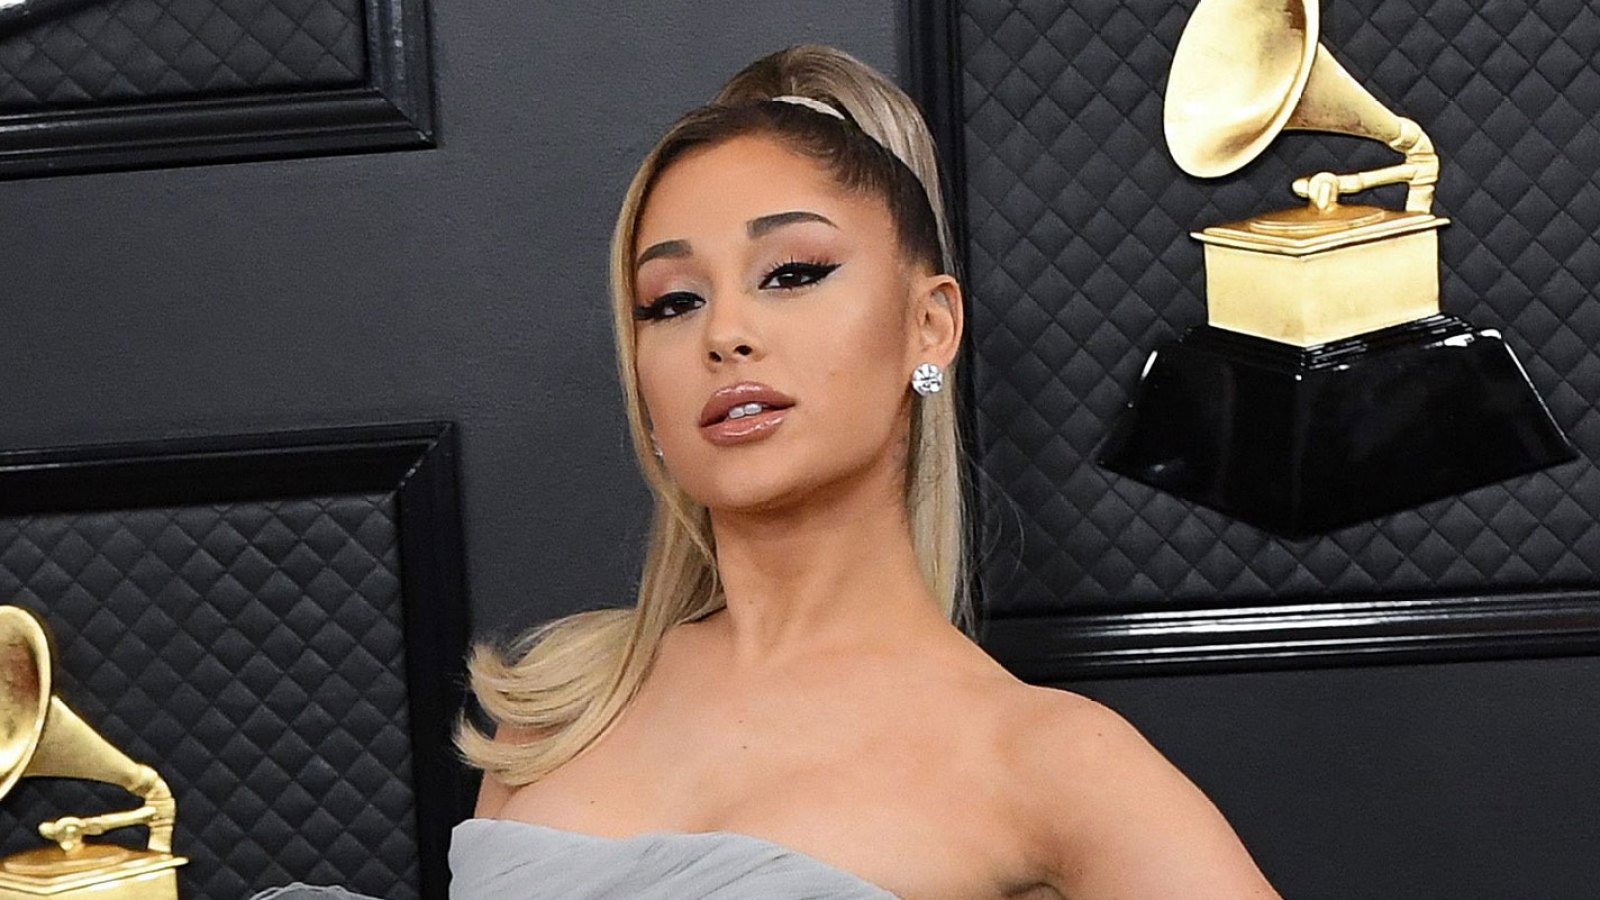 Ariana Grande Creampie - Grammys 2022: Ariana Grande Skips Awards Show Amid 3 Nominations